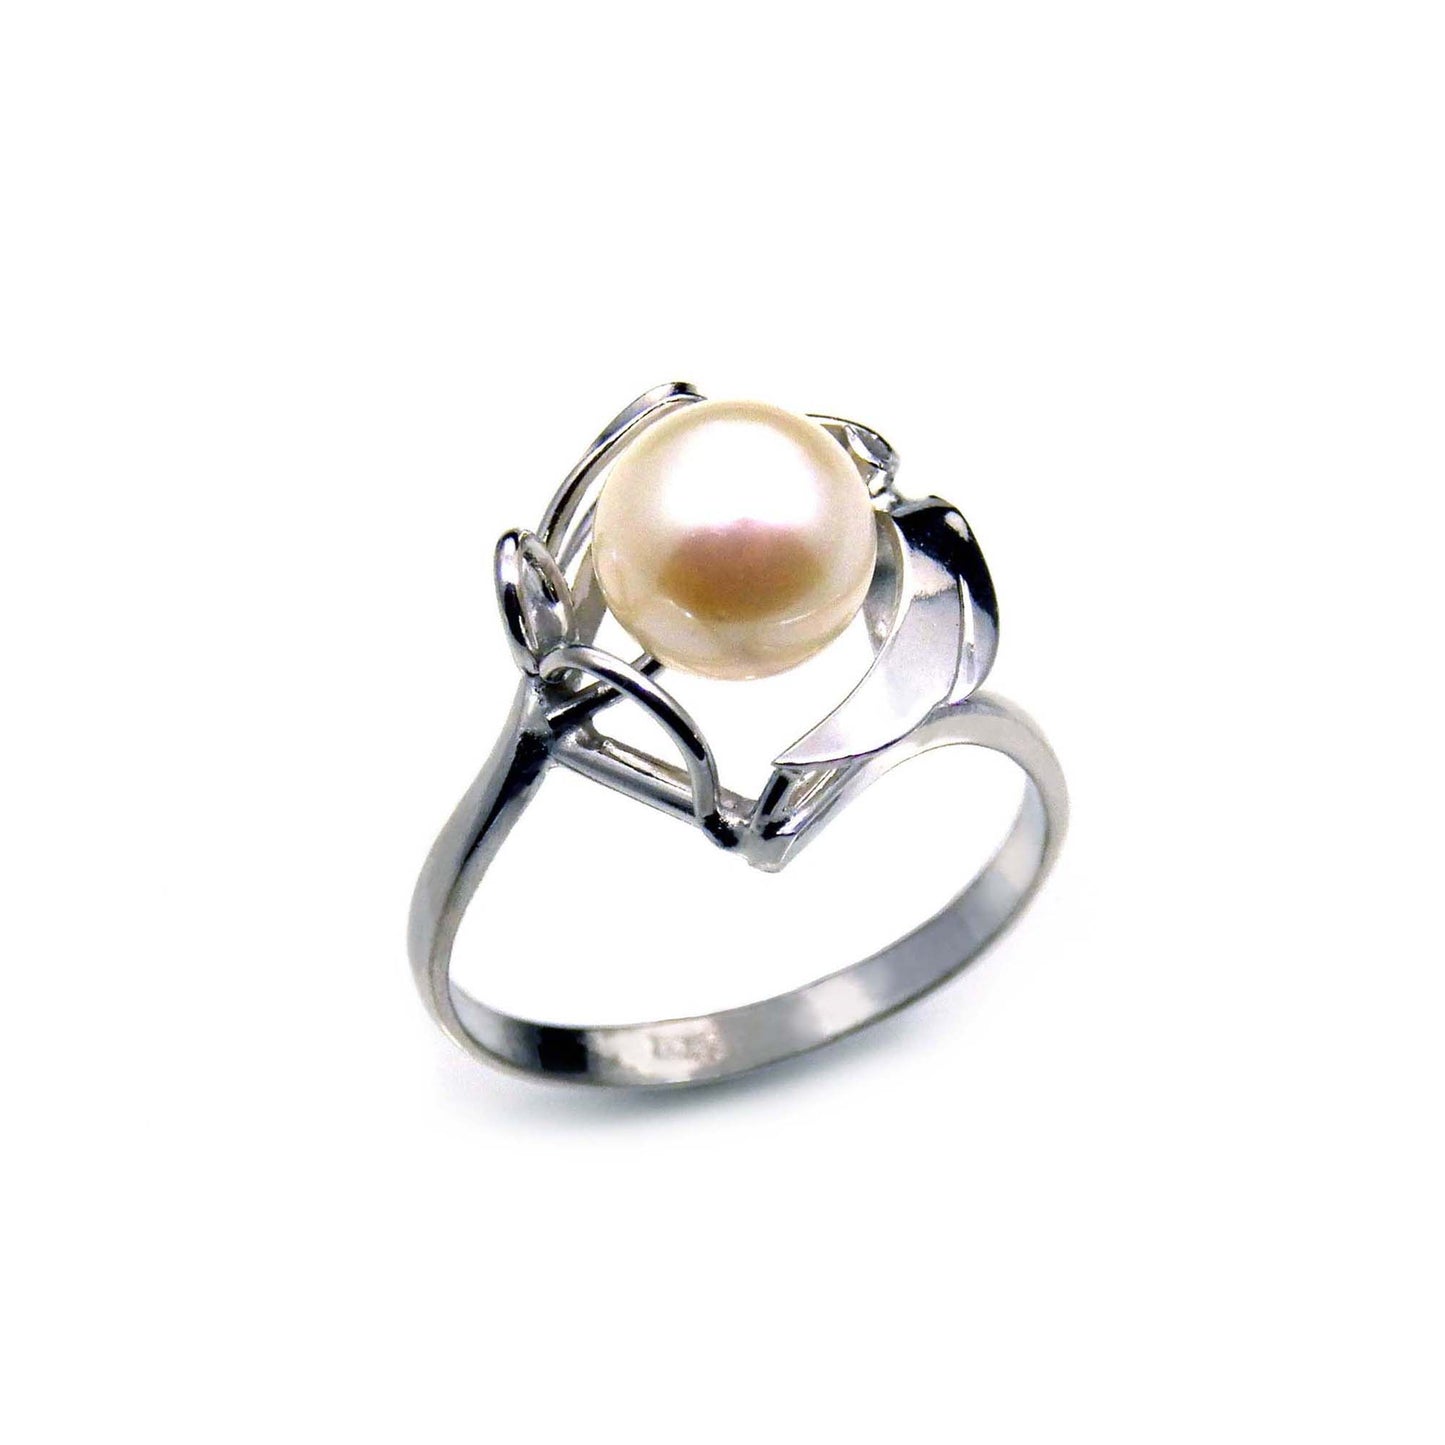 White Akoya Pearl Ring in Sterling Silver, Vintage Japanese Gemstone Jewelry